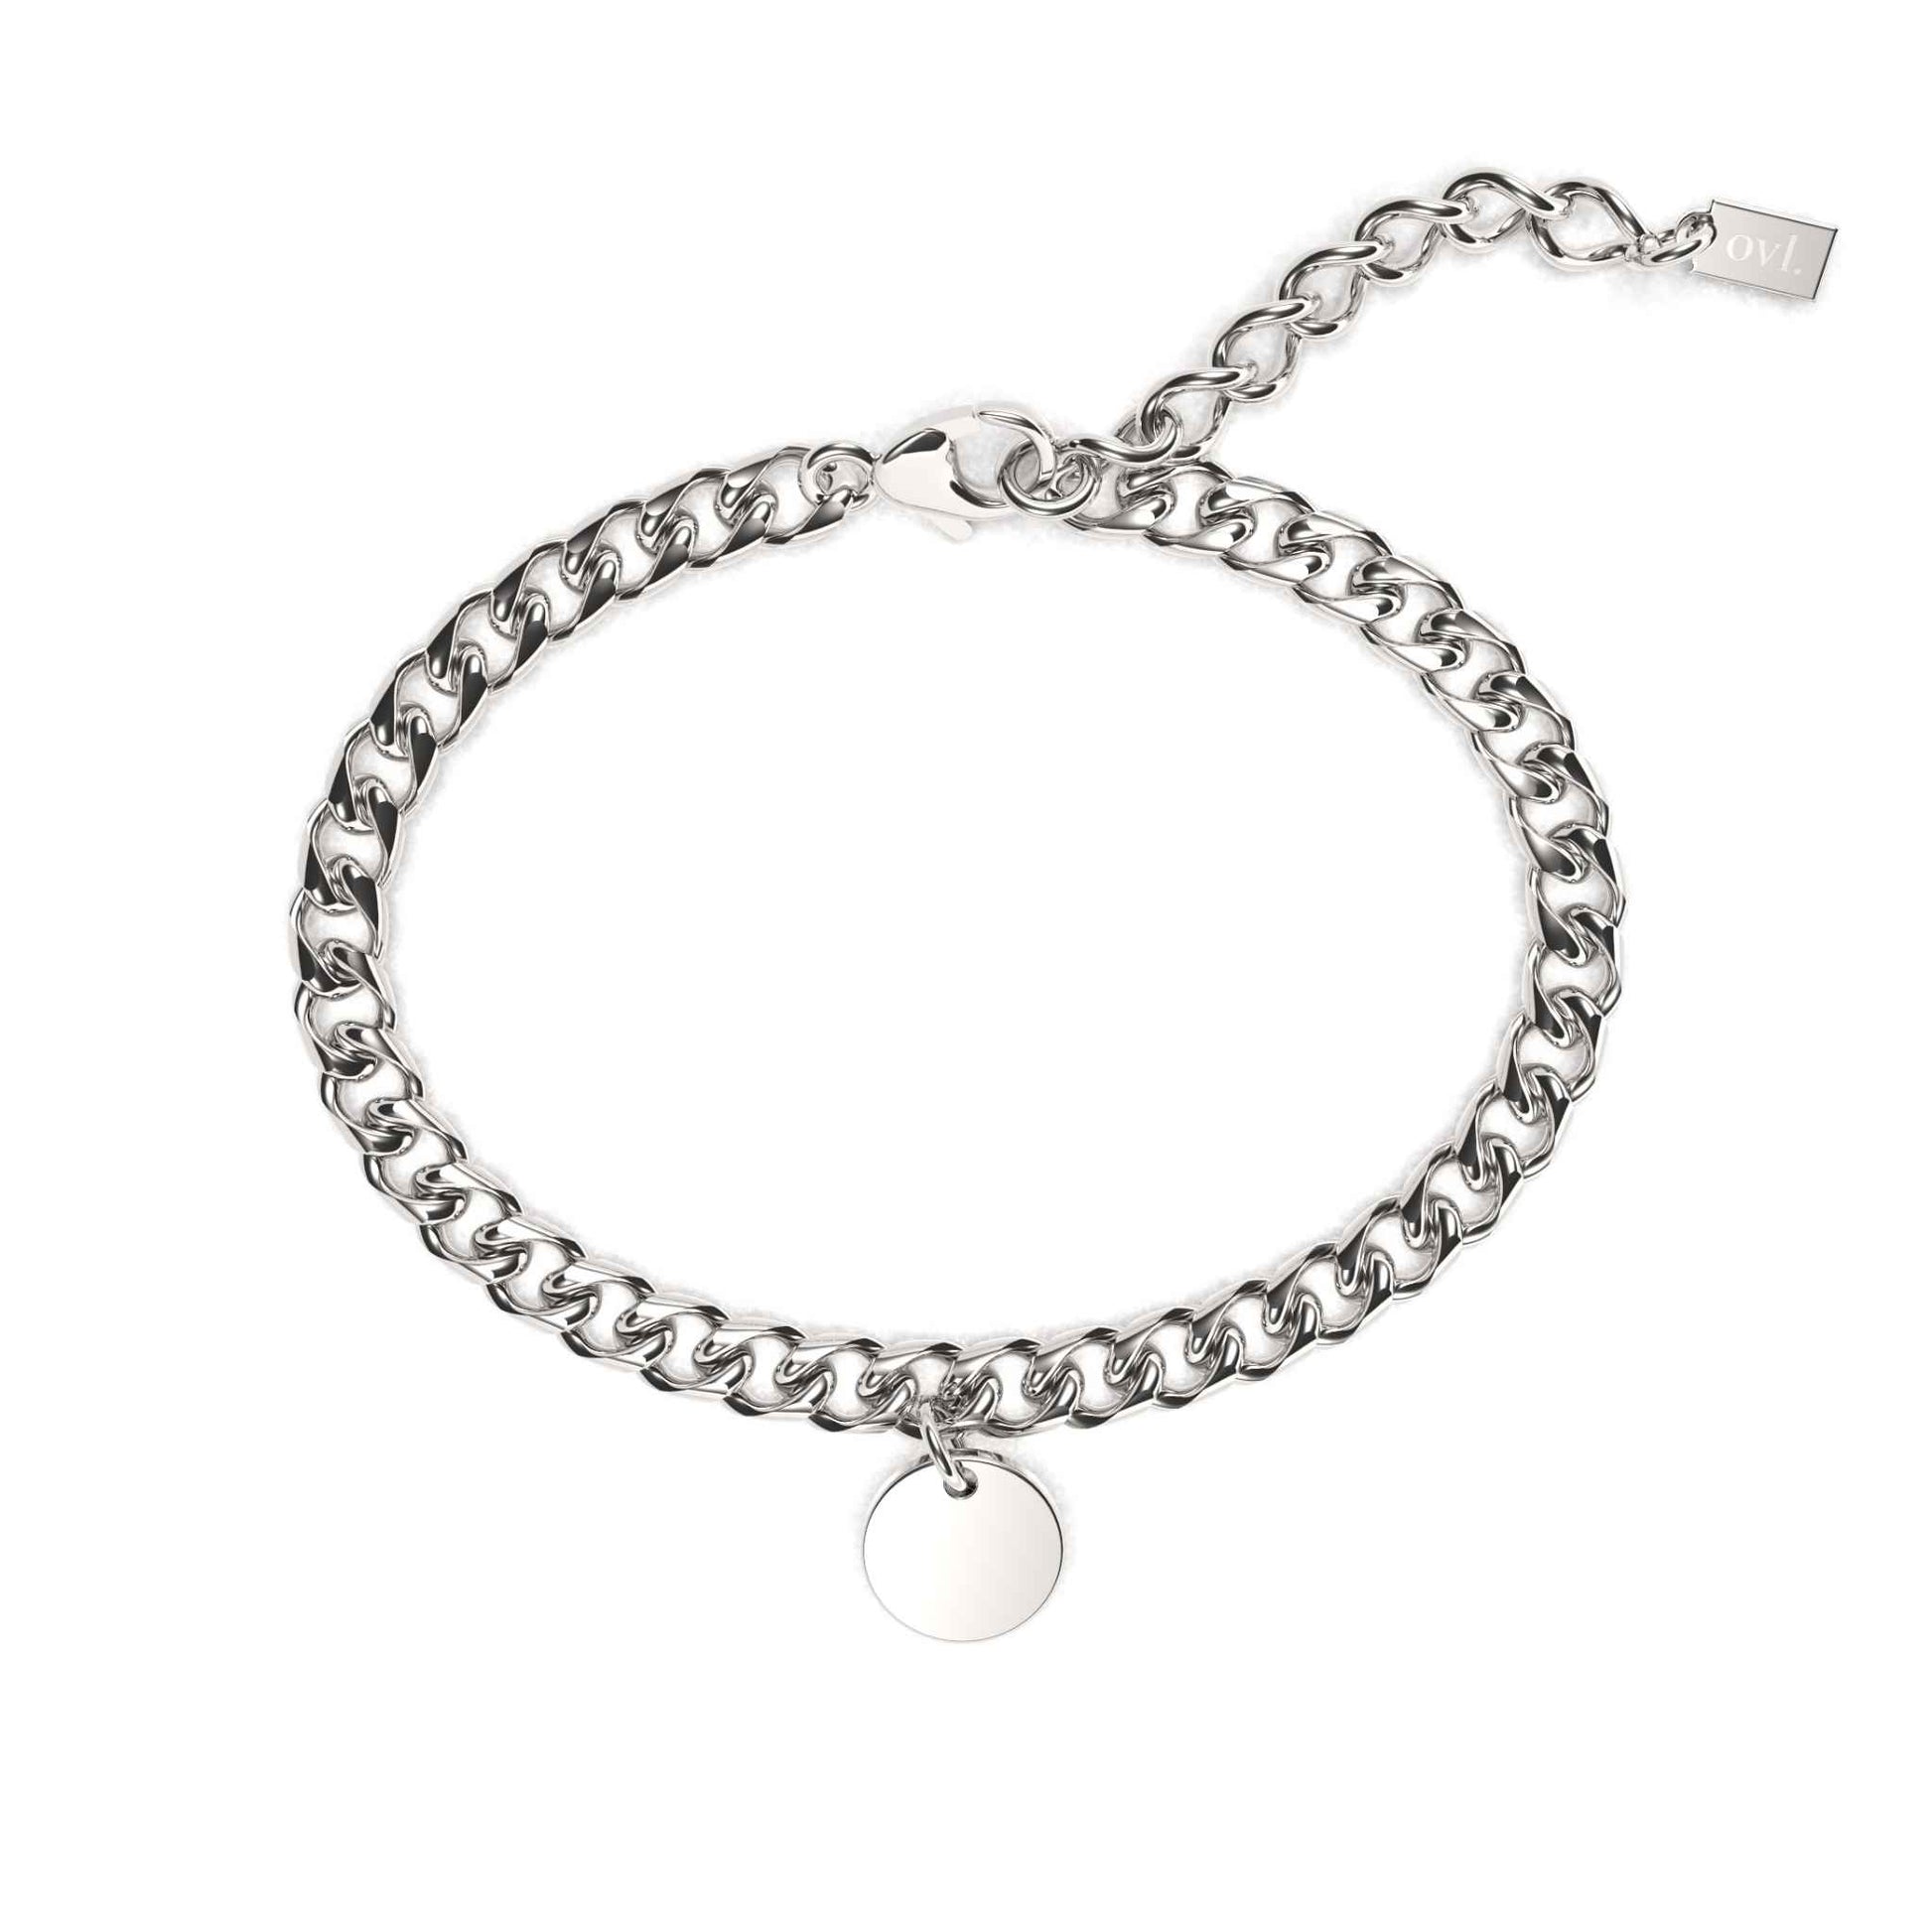 Copper Chain Bracelet | Chain Bracelet | The Ovl Collection